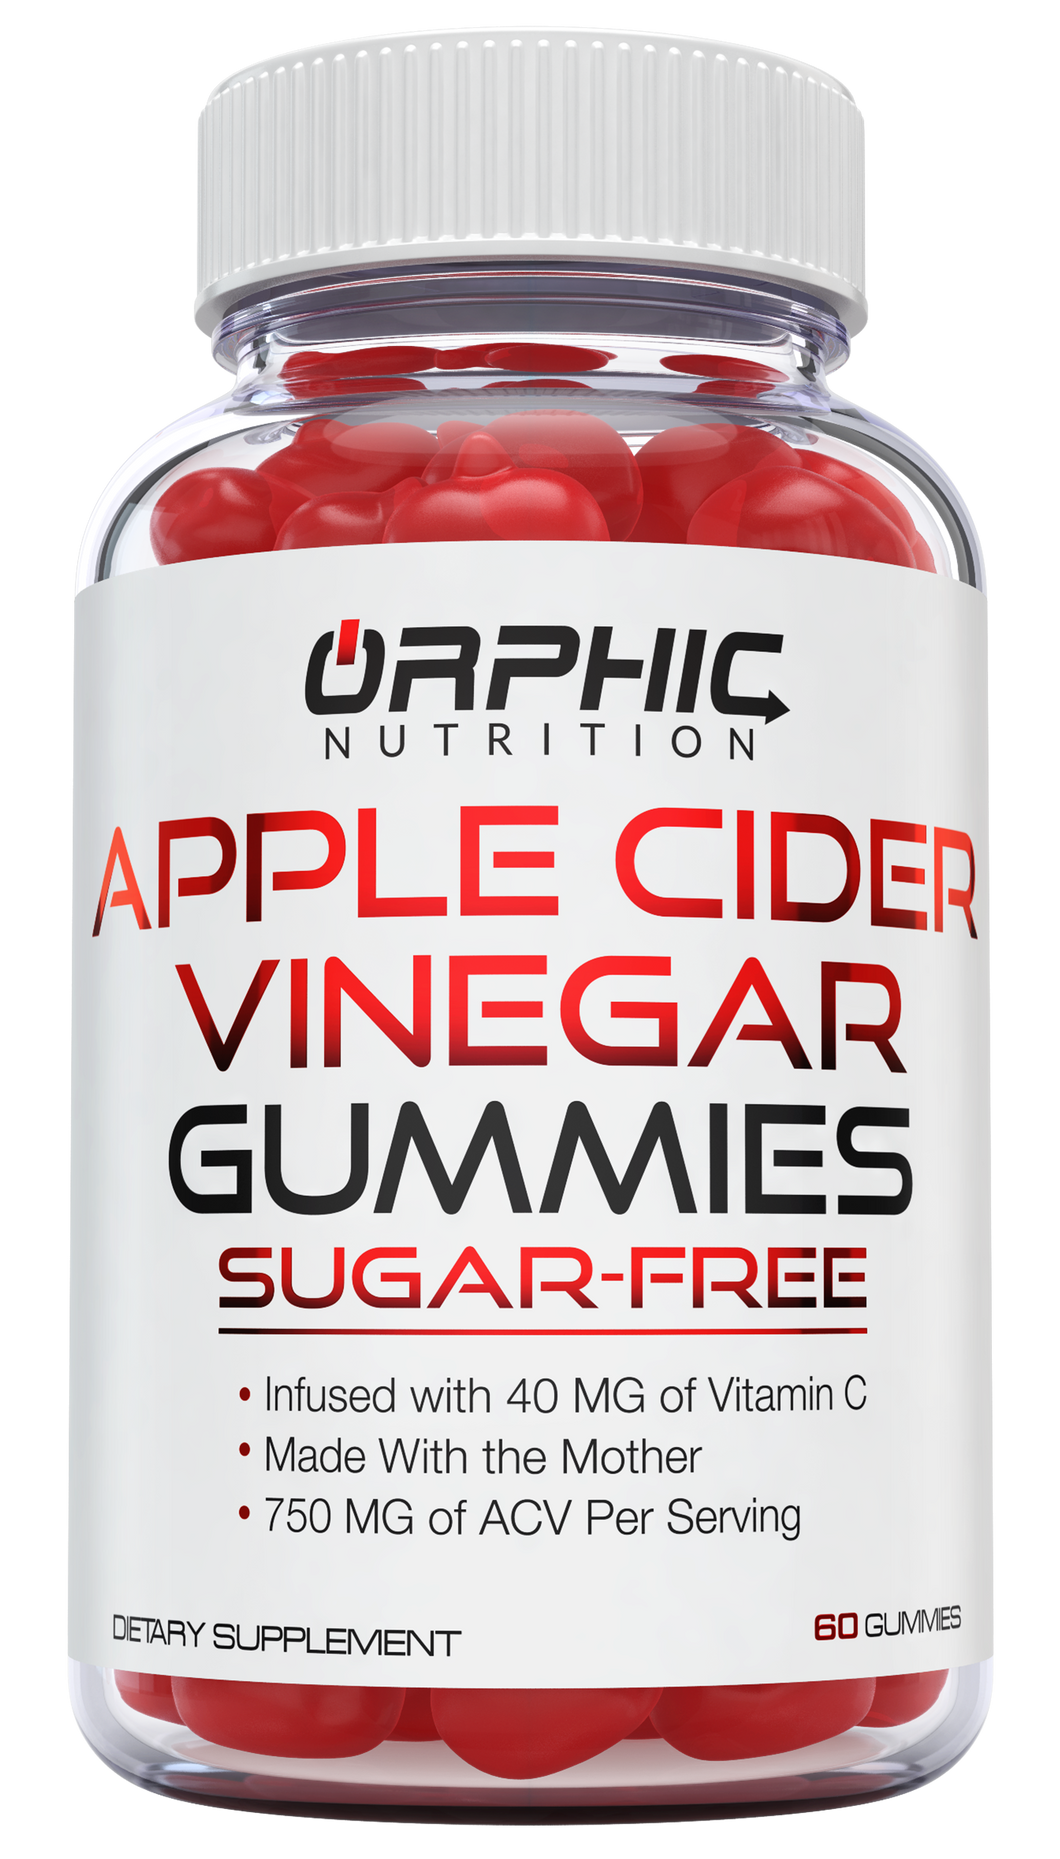 Sugar Free Apple Cider Vinegar Gummies